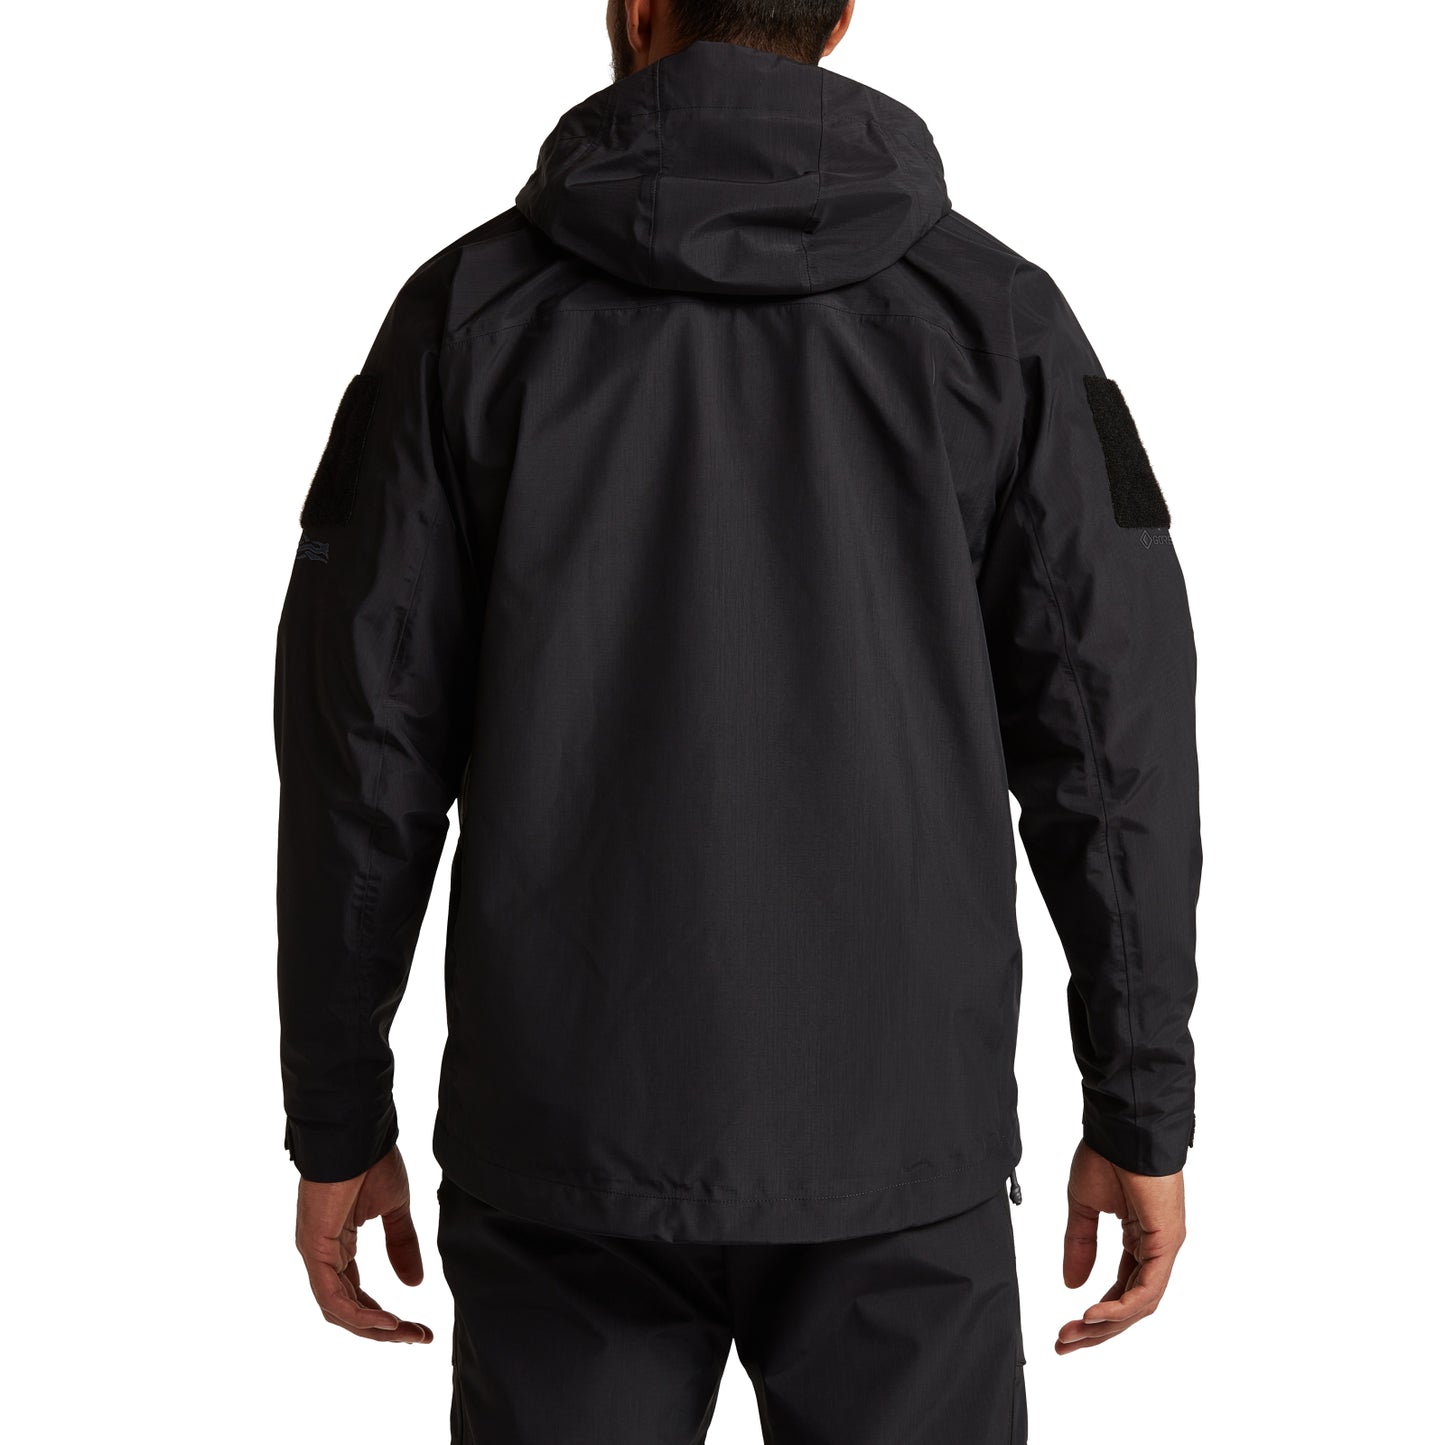 Wet Weather Protective Jacket - MDW (Black)